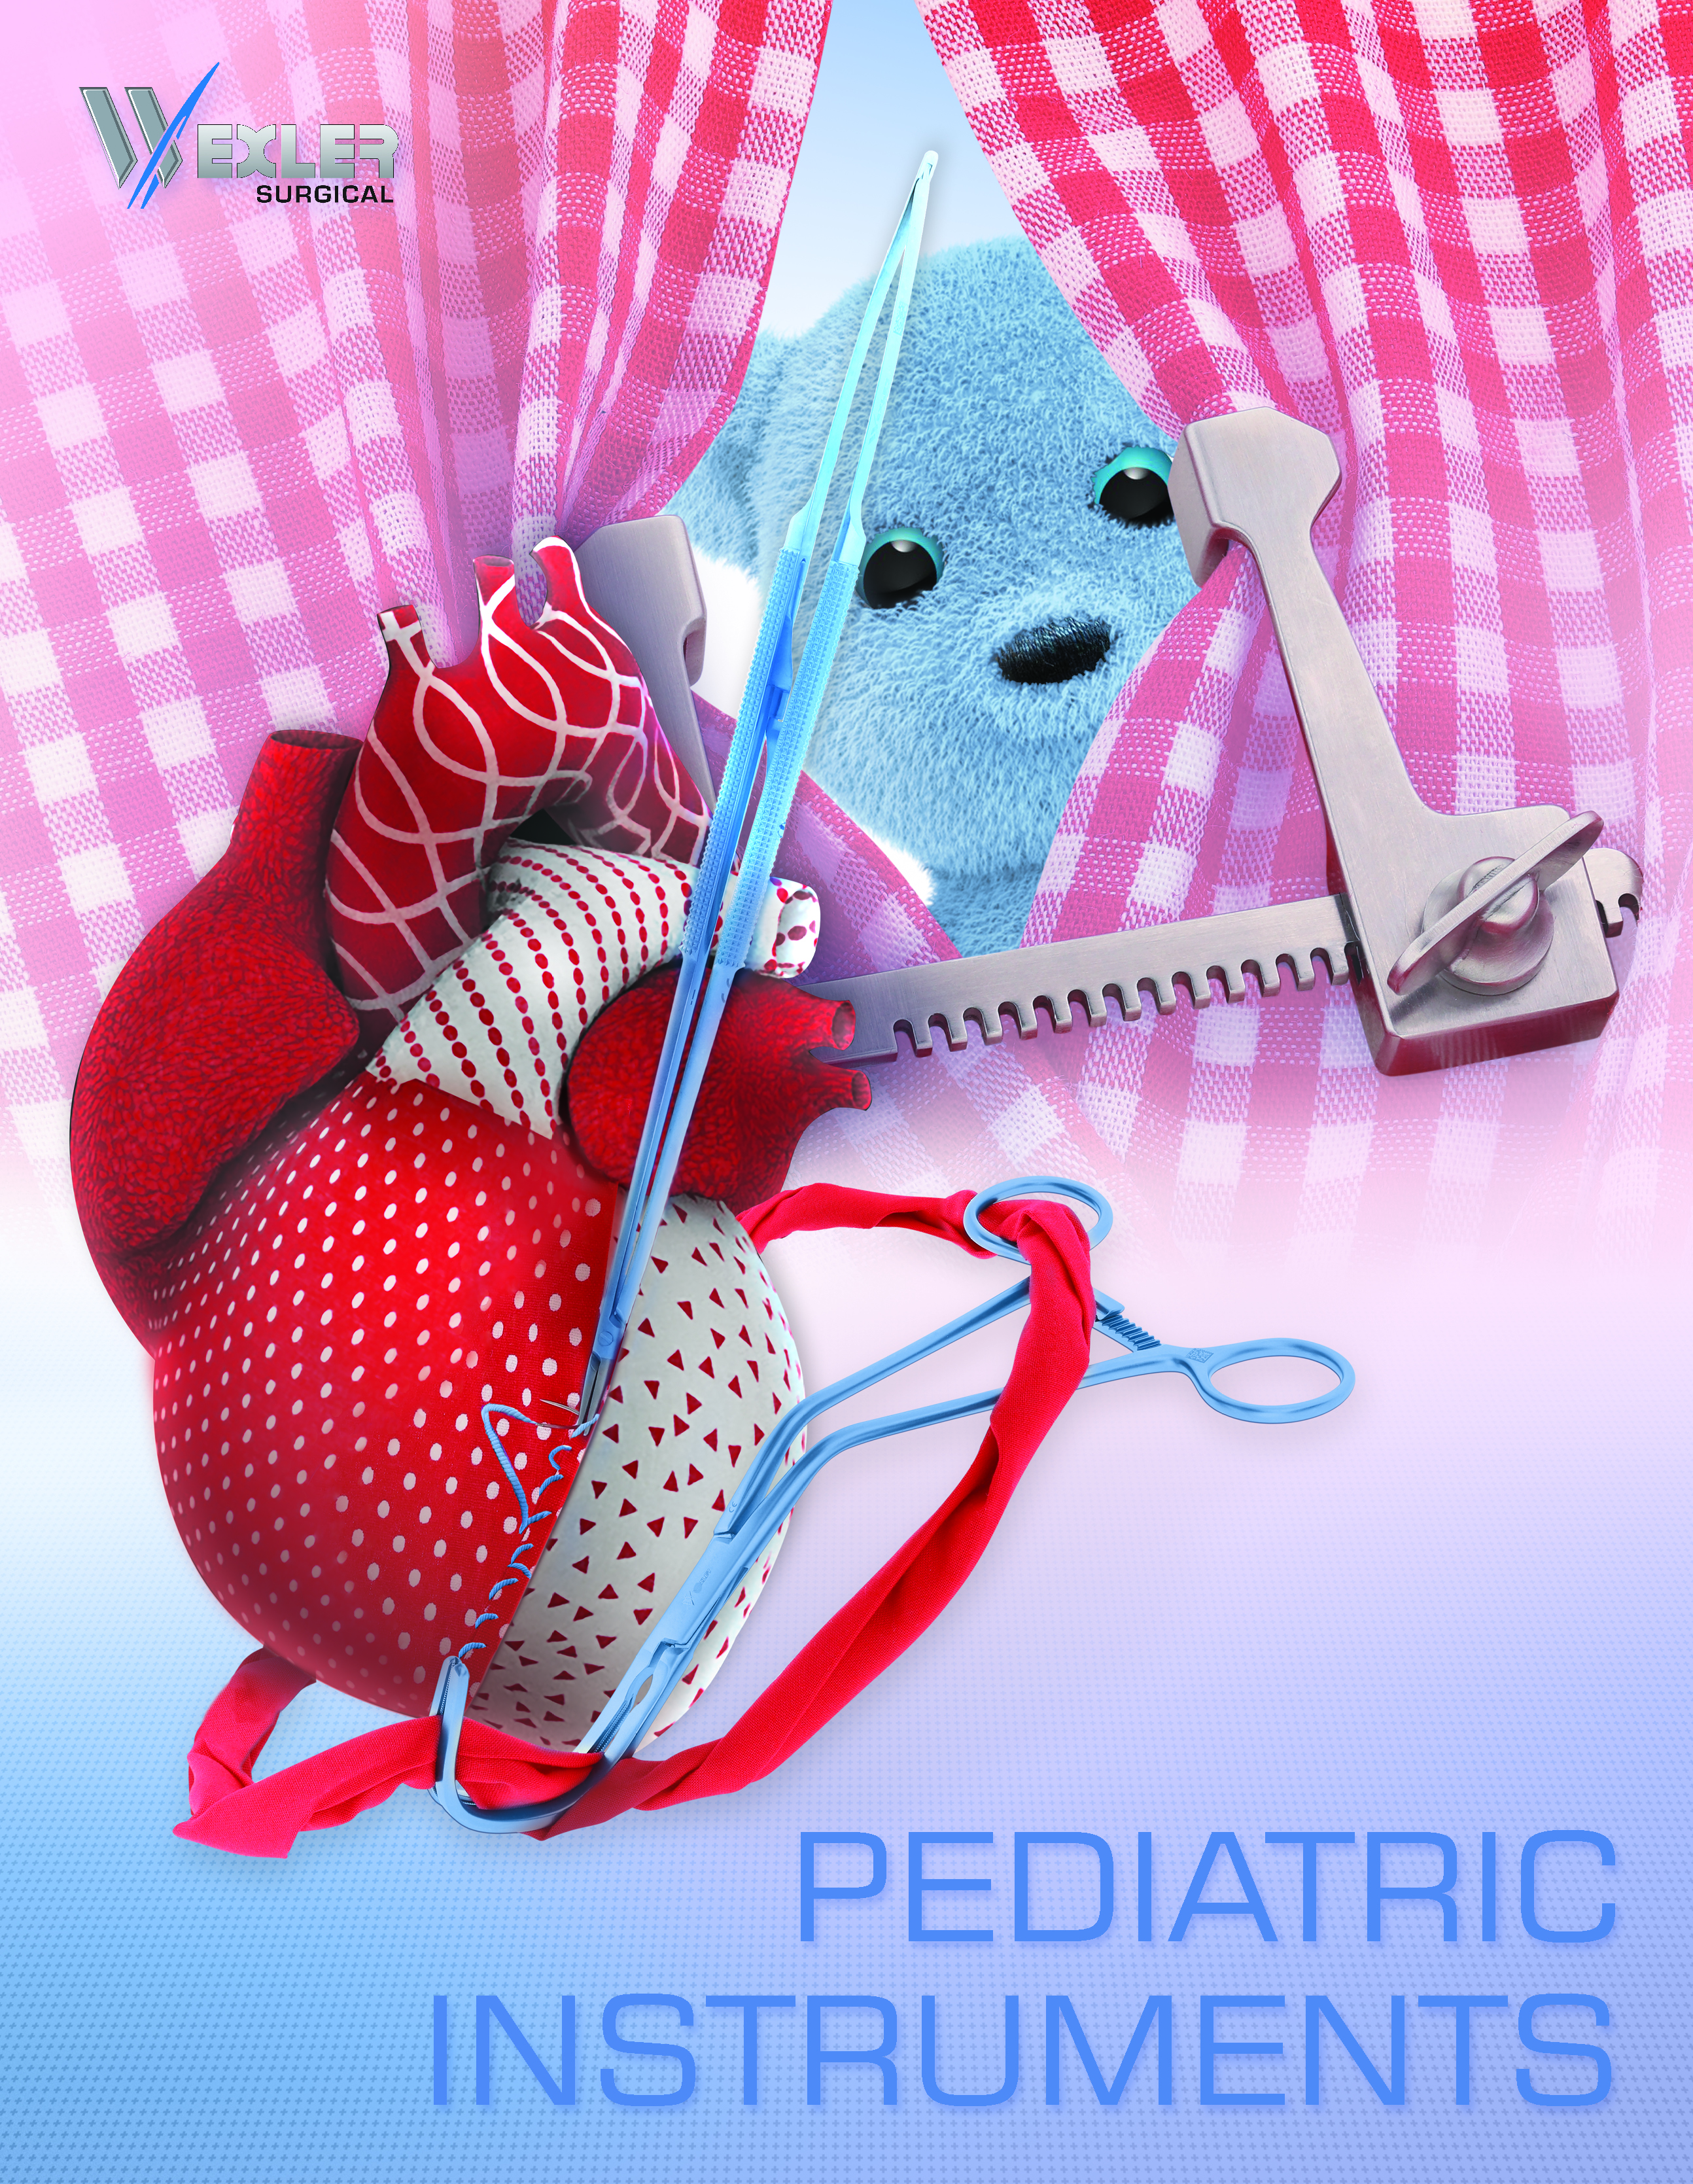 Pediatric Instruments